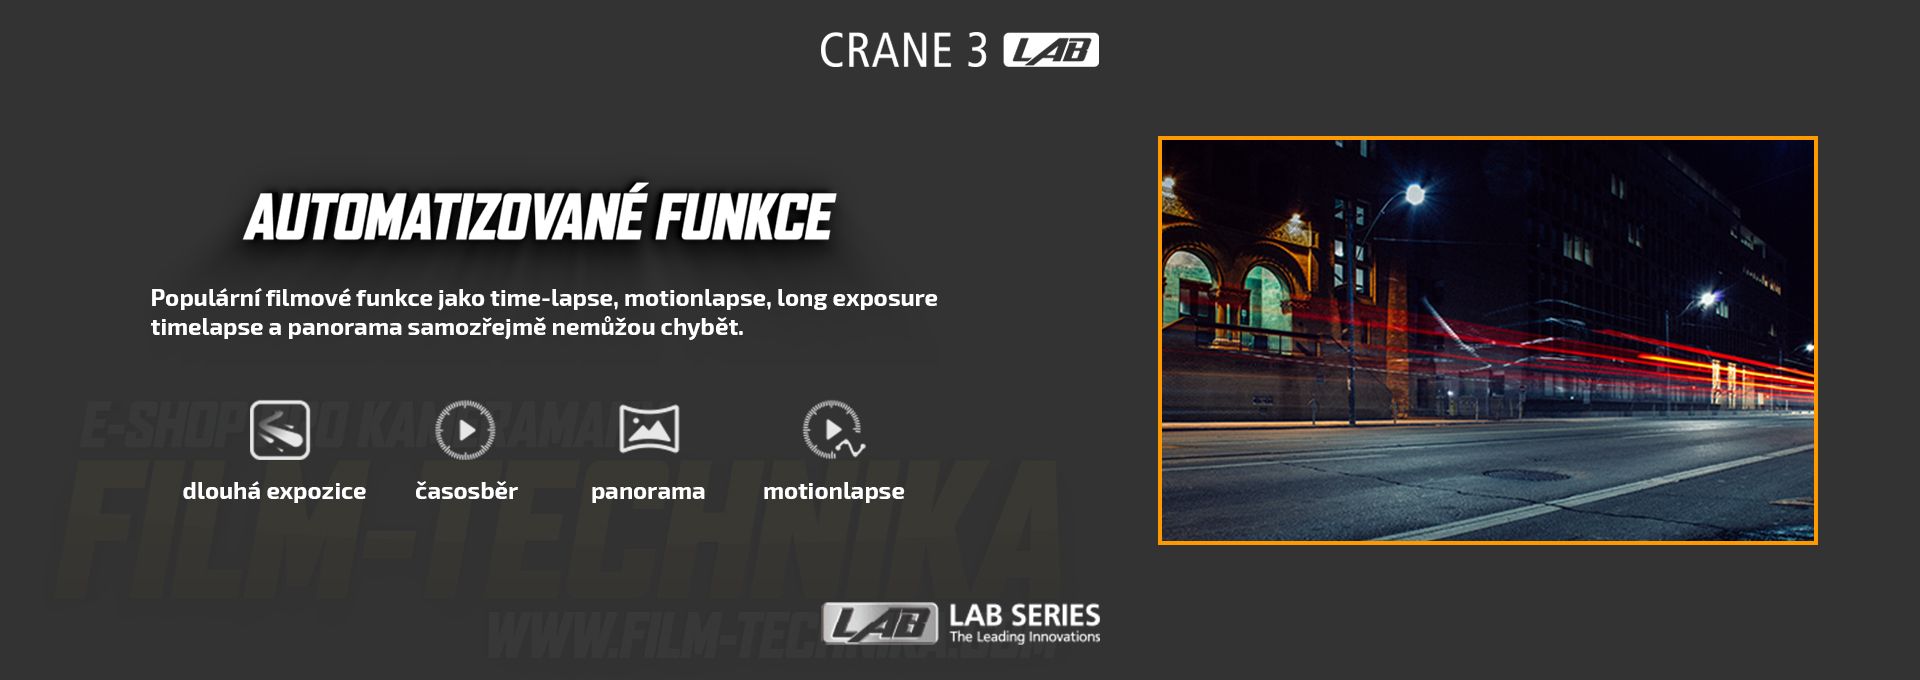 film-technika-zhiyun-crane3-lab-intext15a